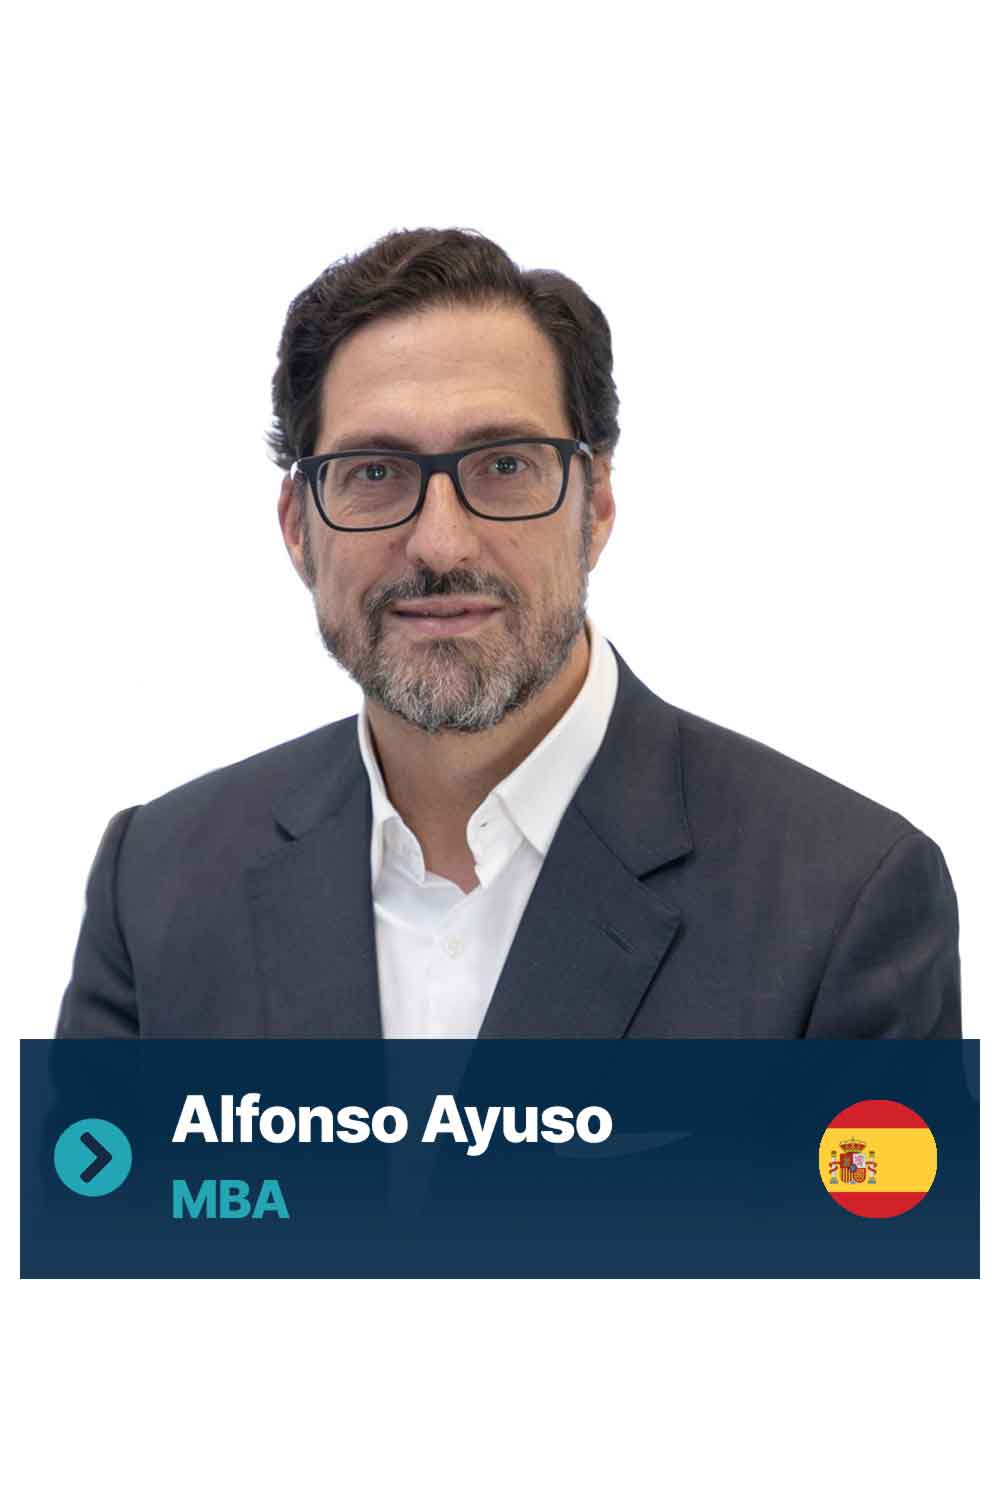 Alfonso Ayuso